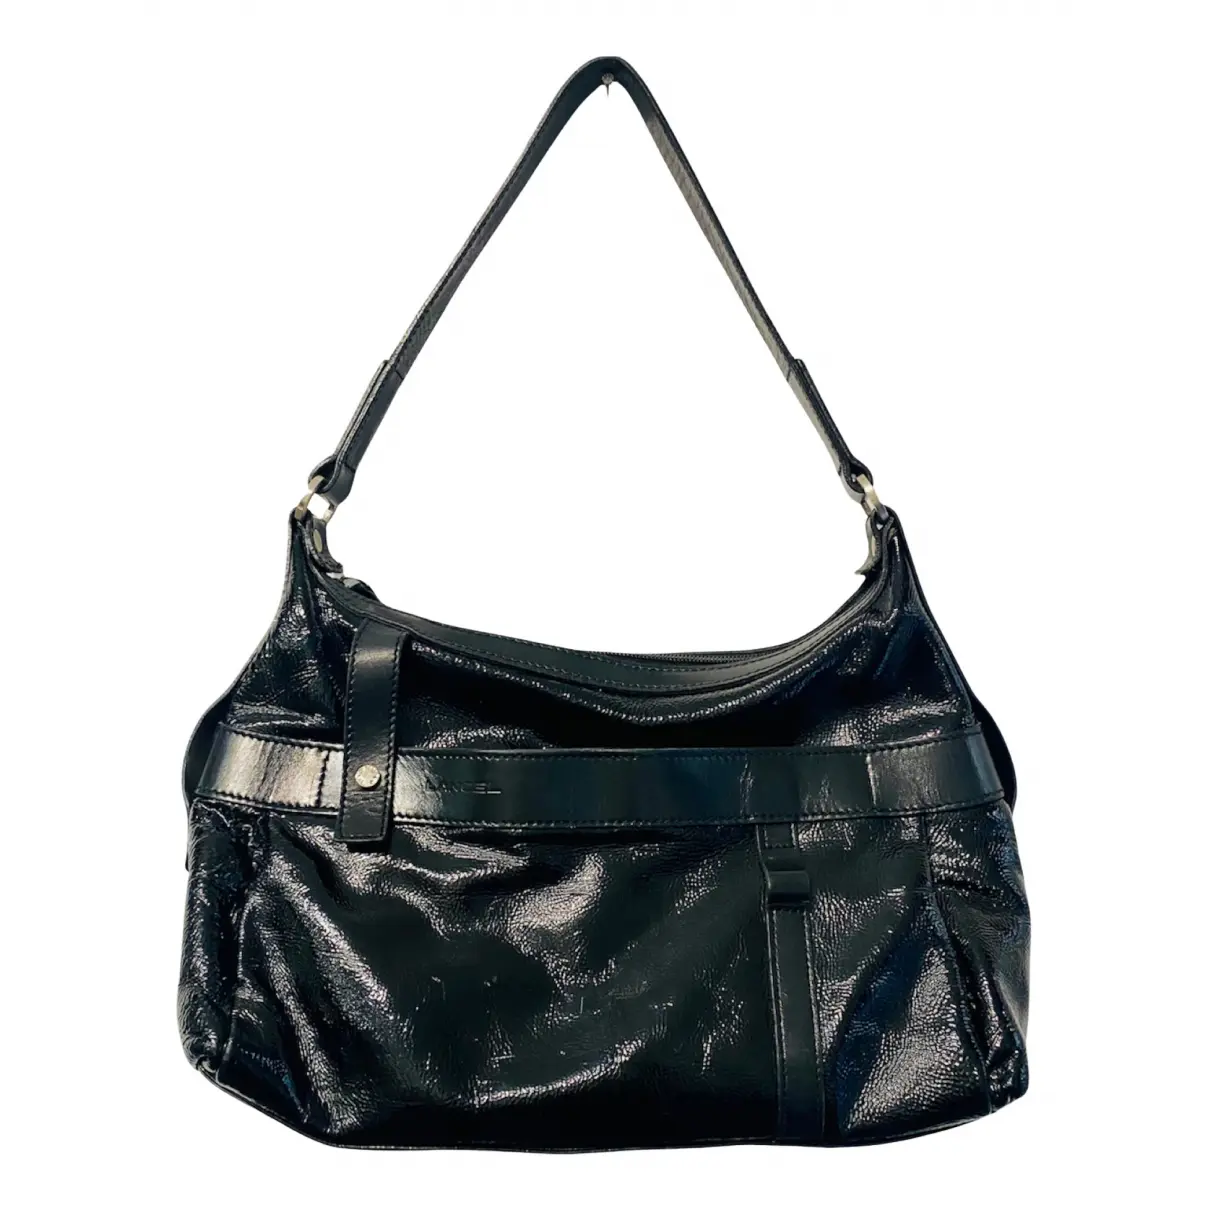 Patent leather handbag Lancel